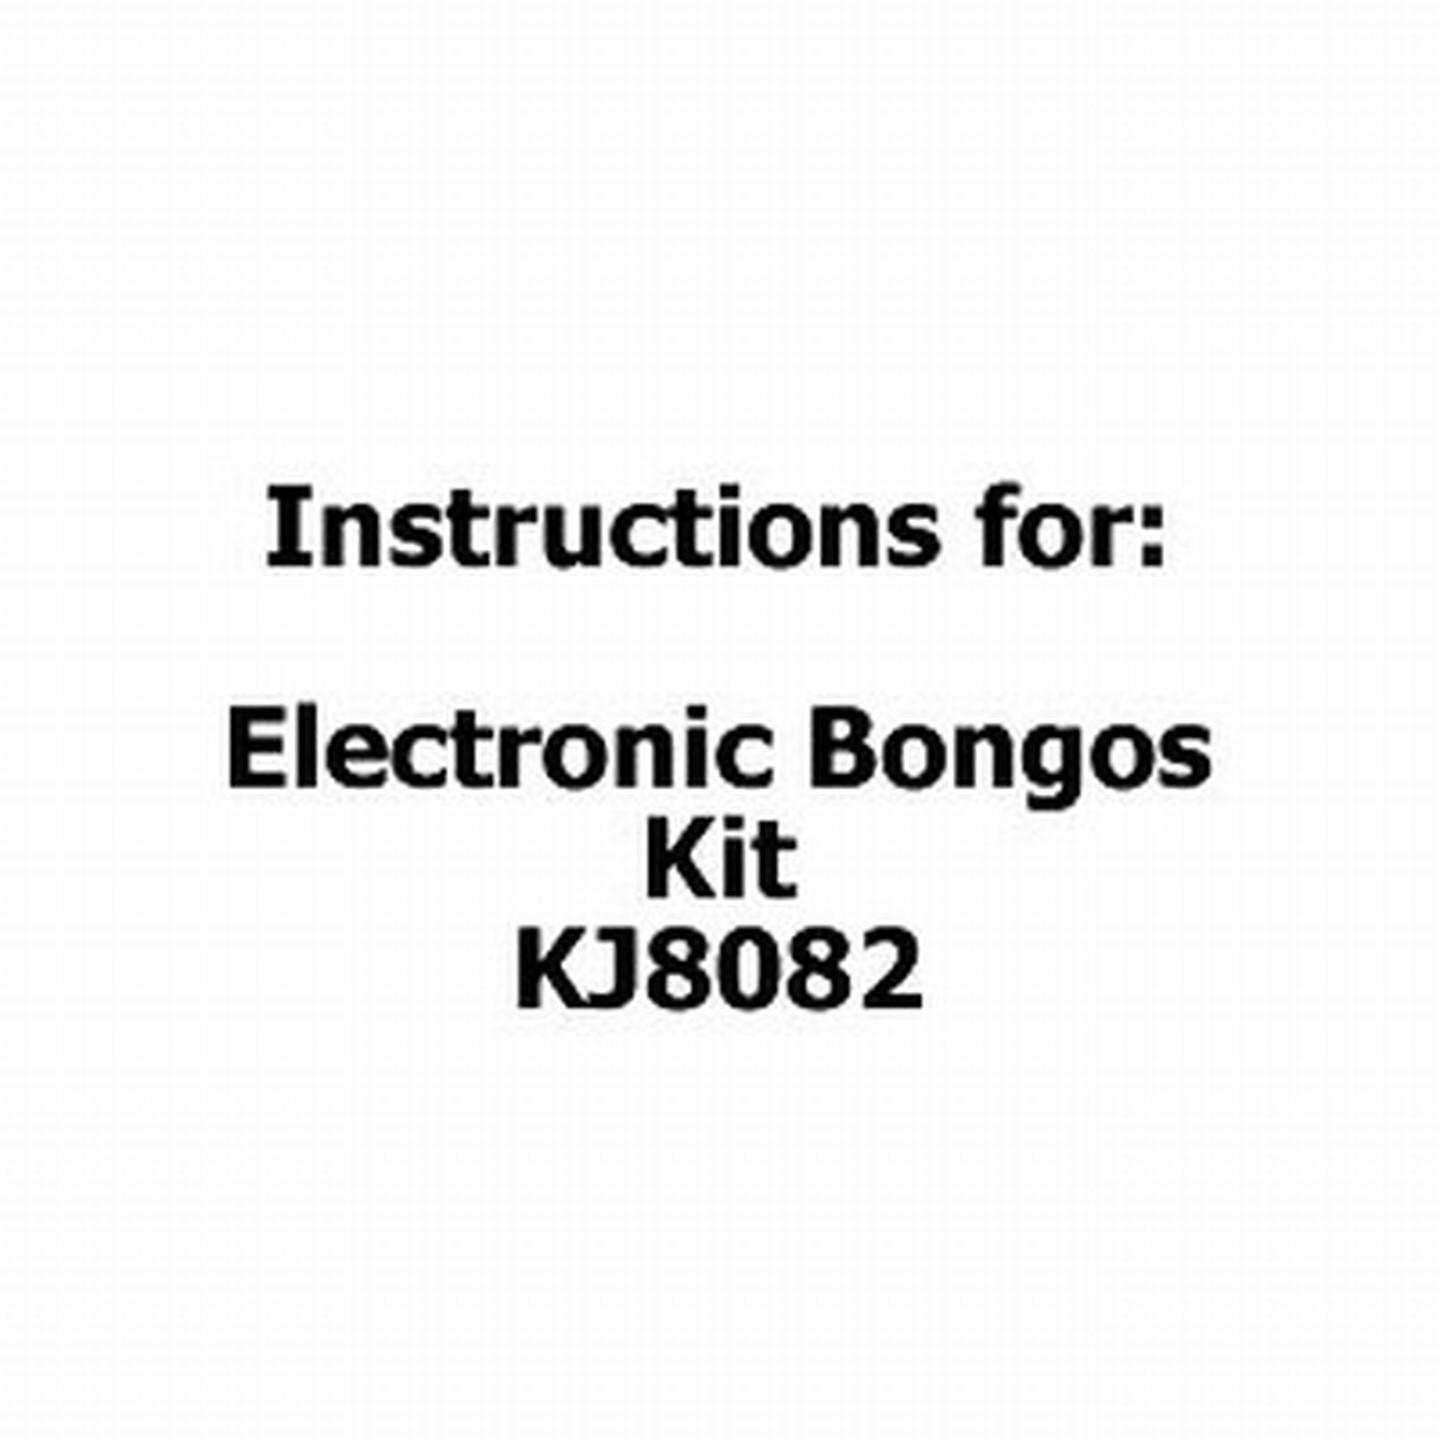 Instructions for Electronic Bongos Kit KJ8082